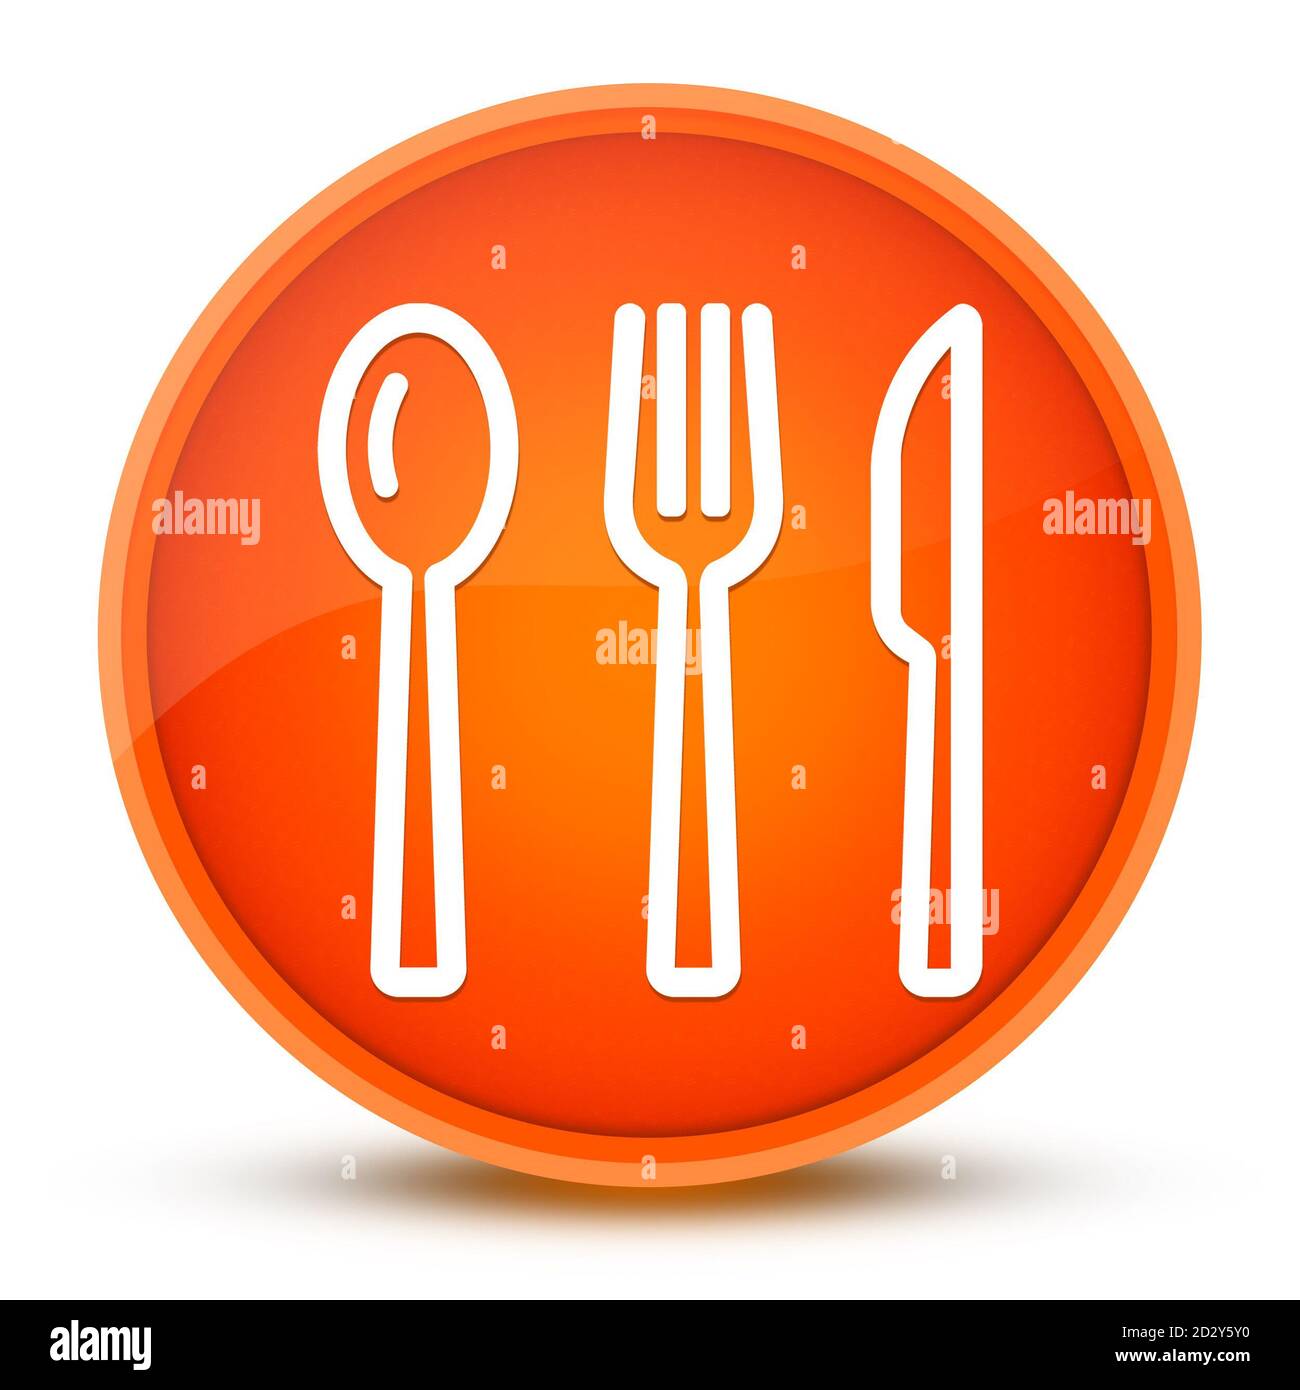 Cutlery luxurious glossy orange round button abstract illustration Stock Photo